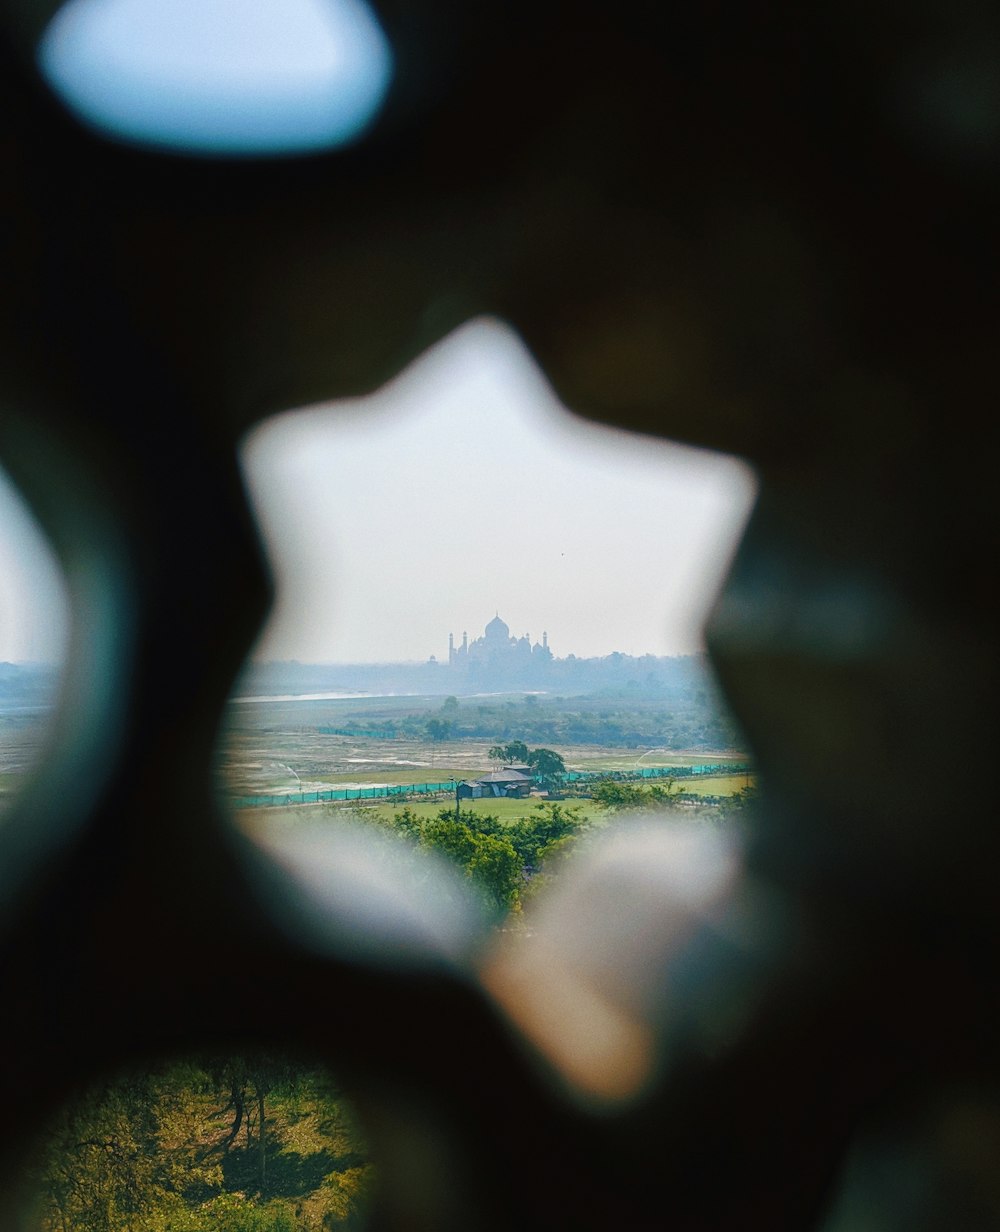 Una vista de un castillo a través de una ventana